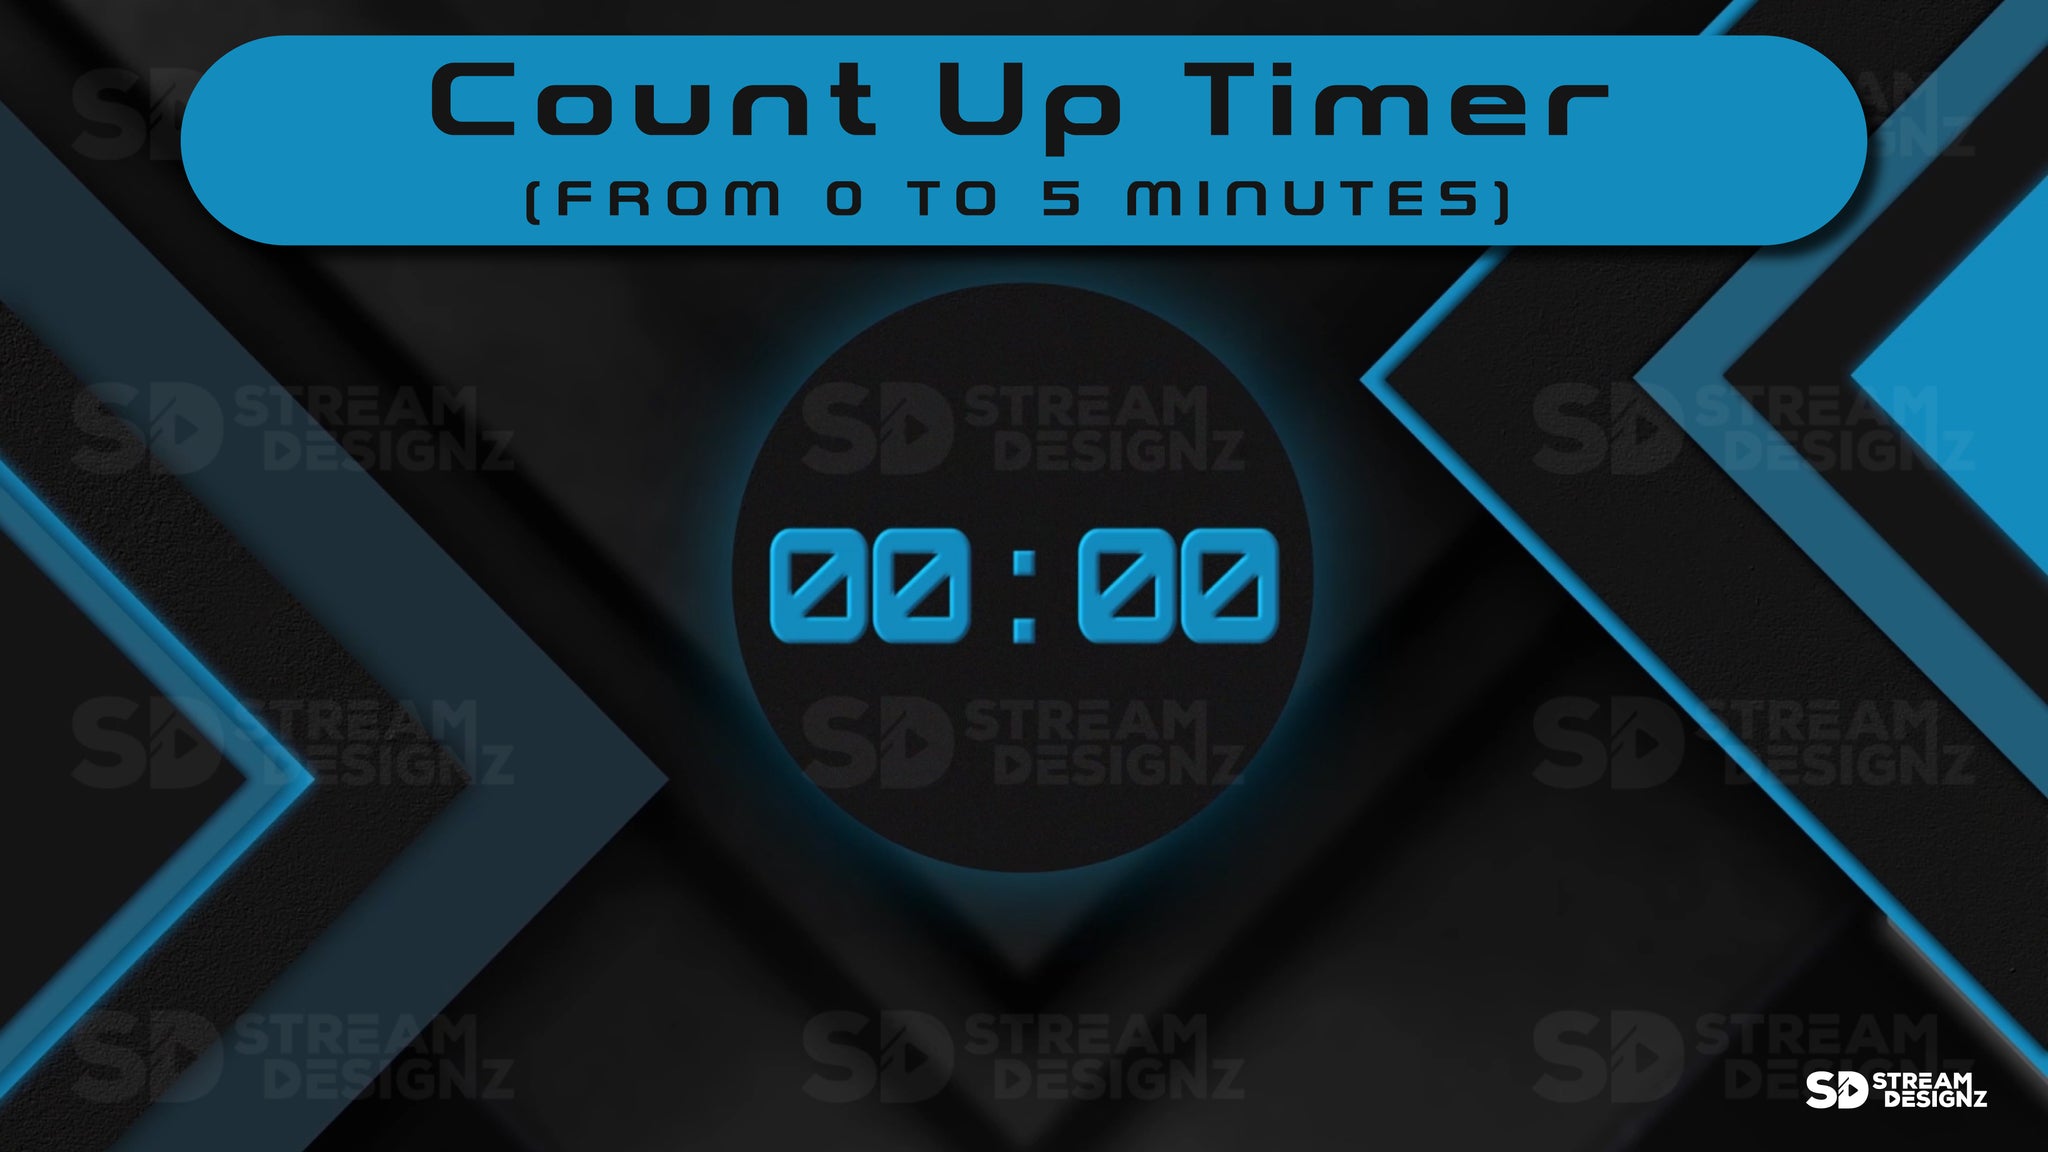 ultimate stream bundle count up timer electric stream designz